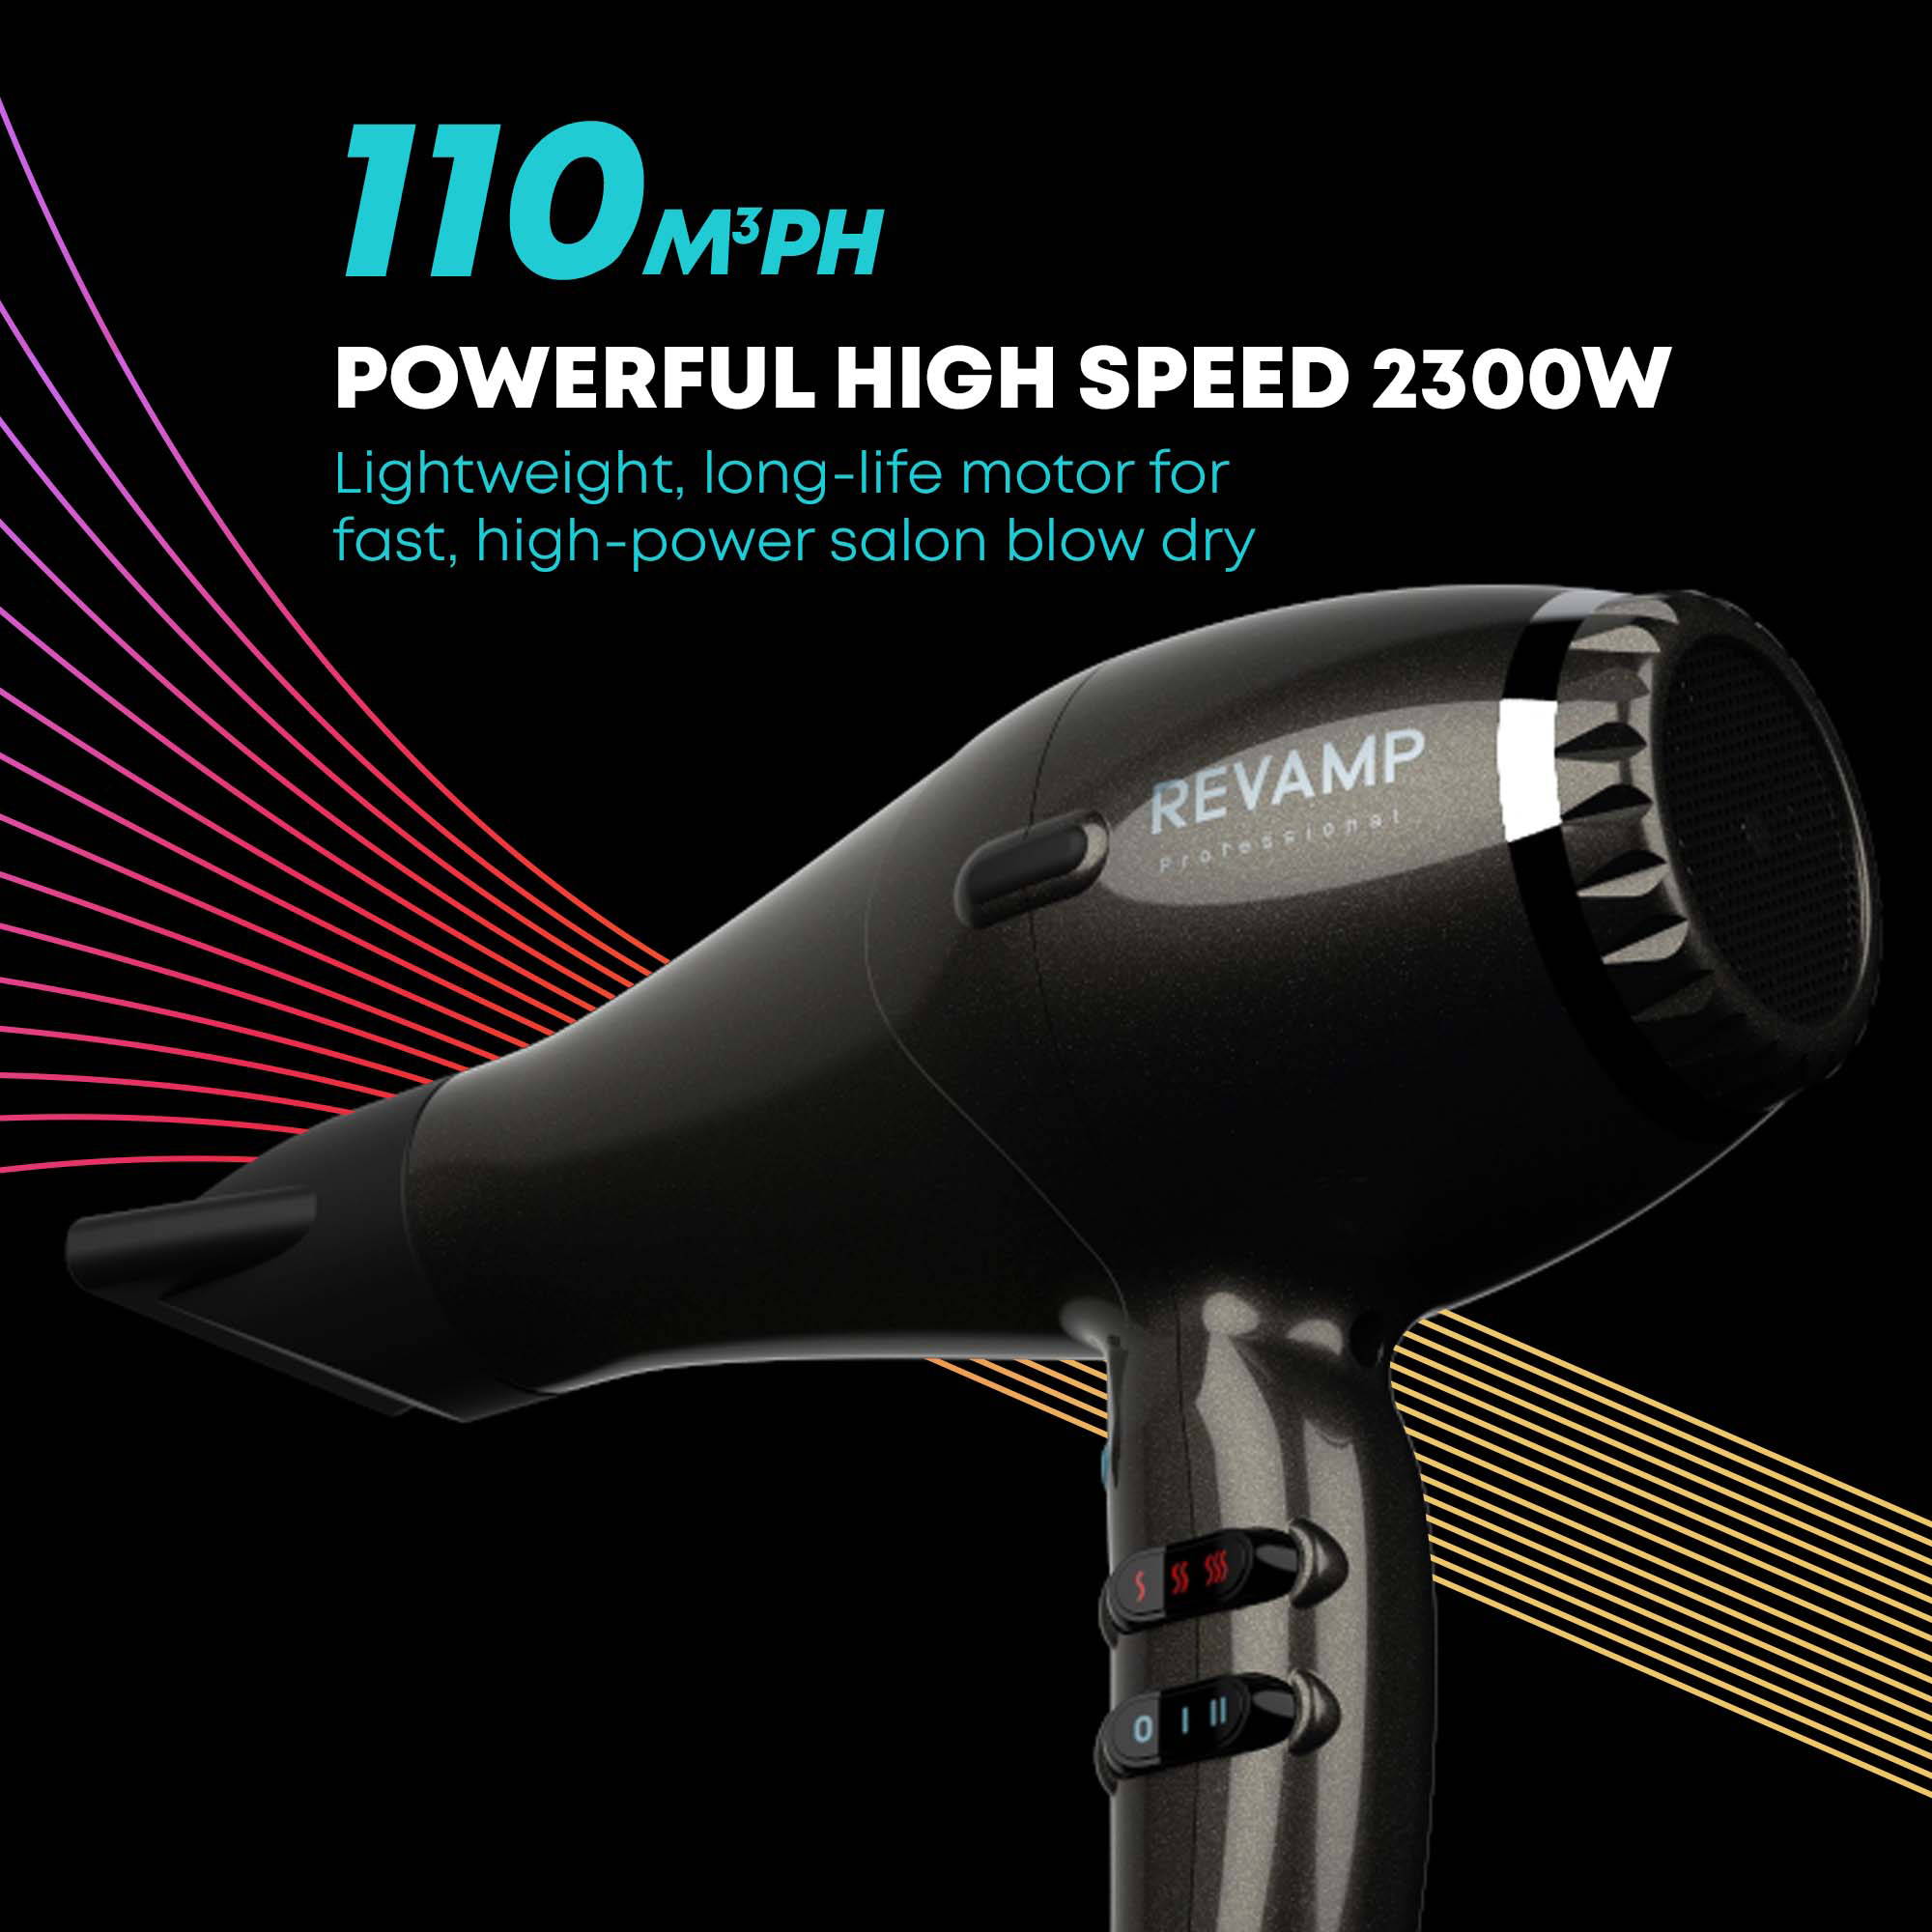 Progloss 3950 AC Featherlite Ultra X Shine Hair Dryer - Powerful High Speed 